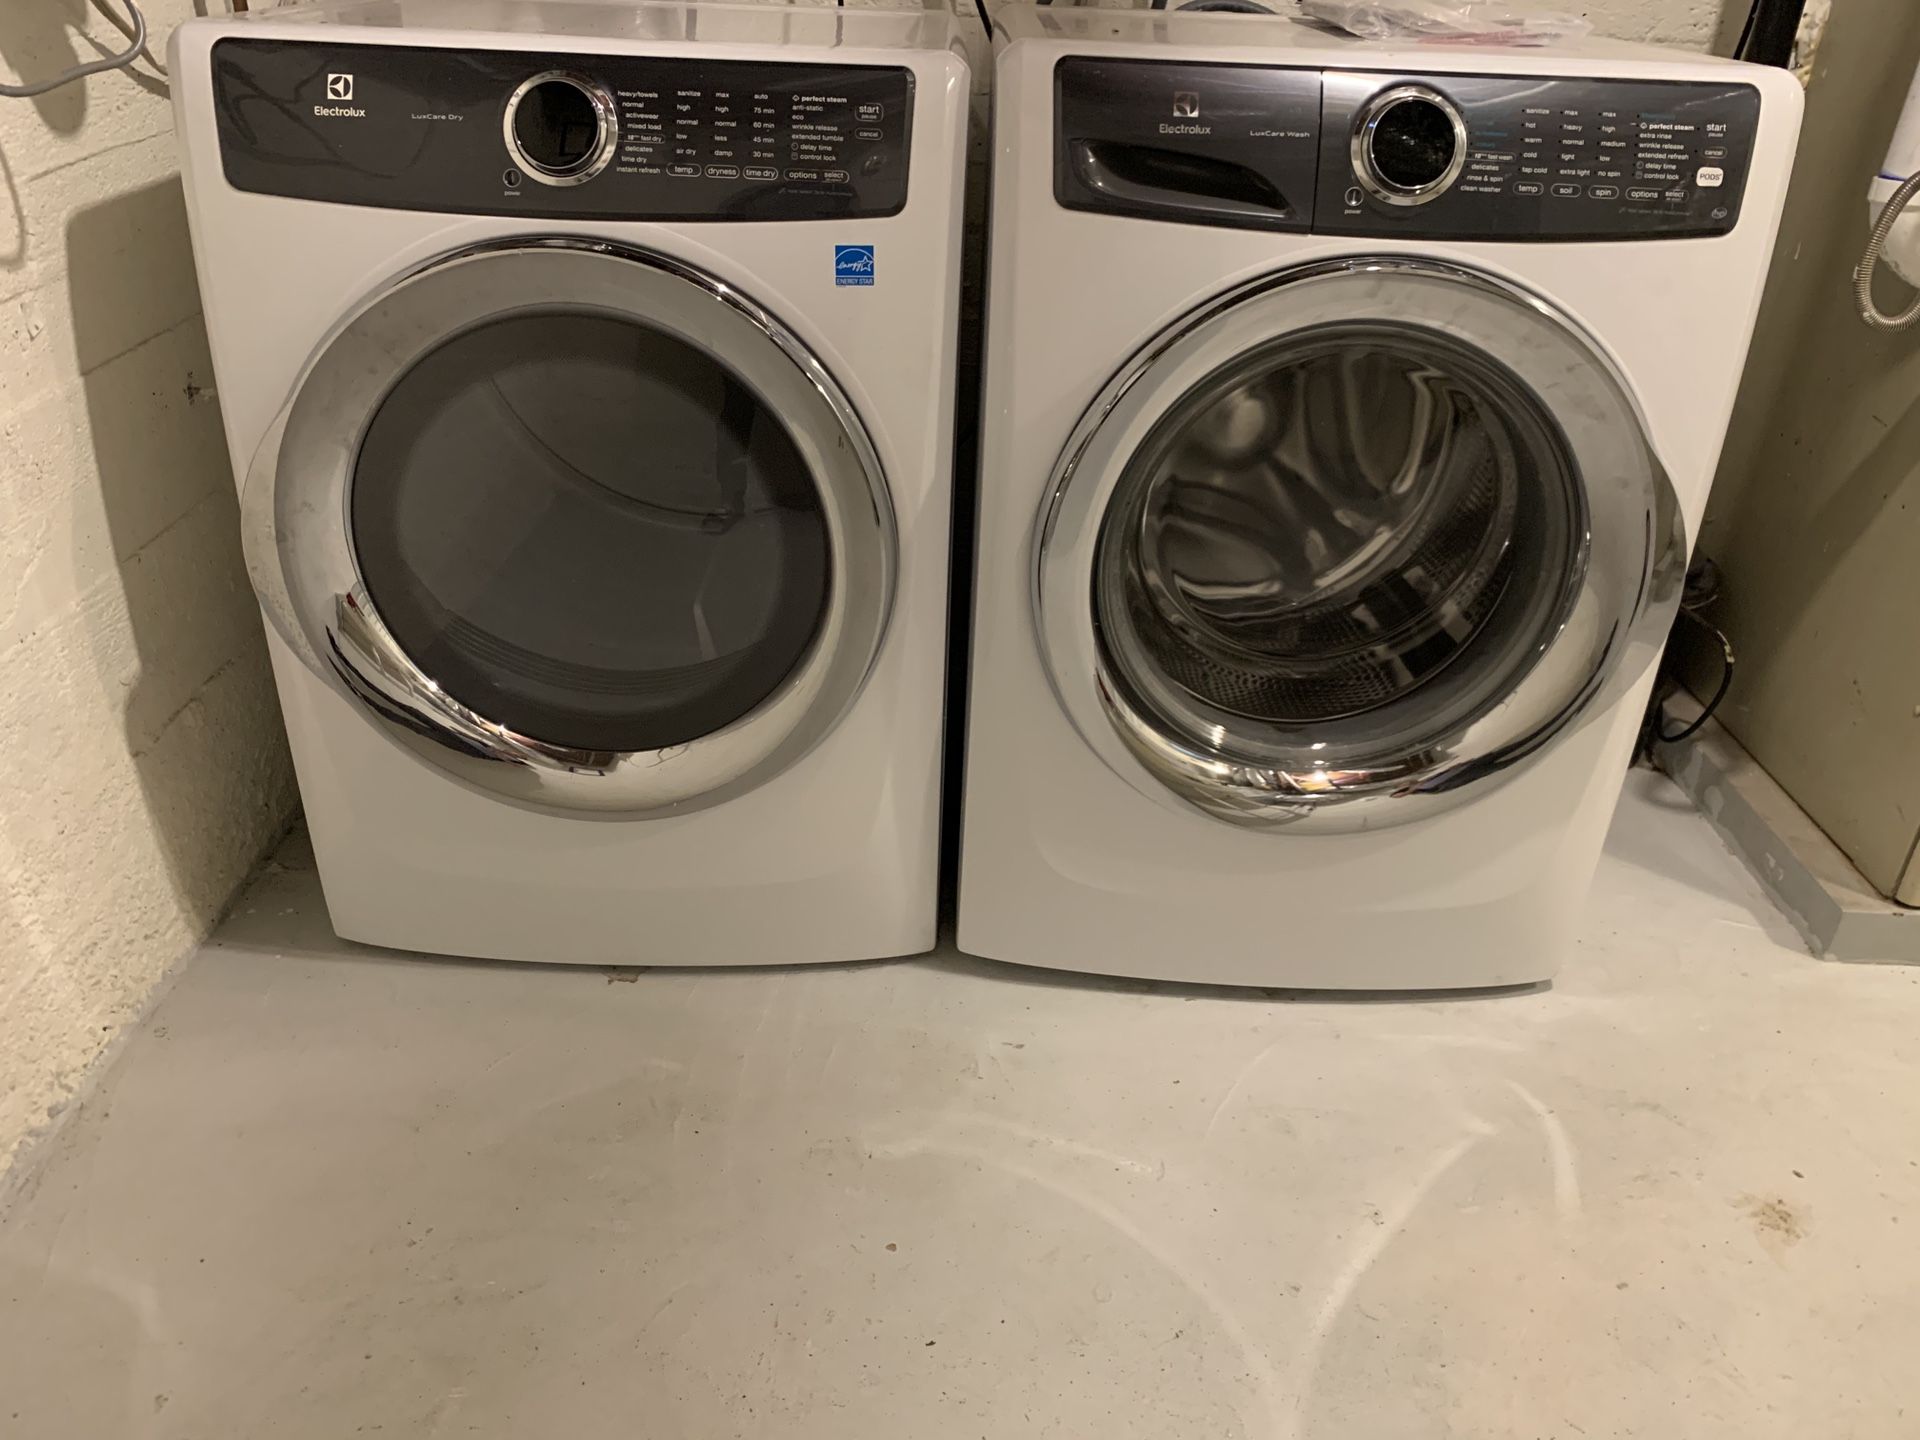 Practically new washer dryer set $500